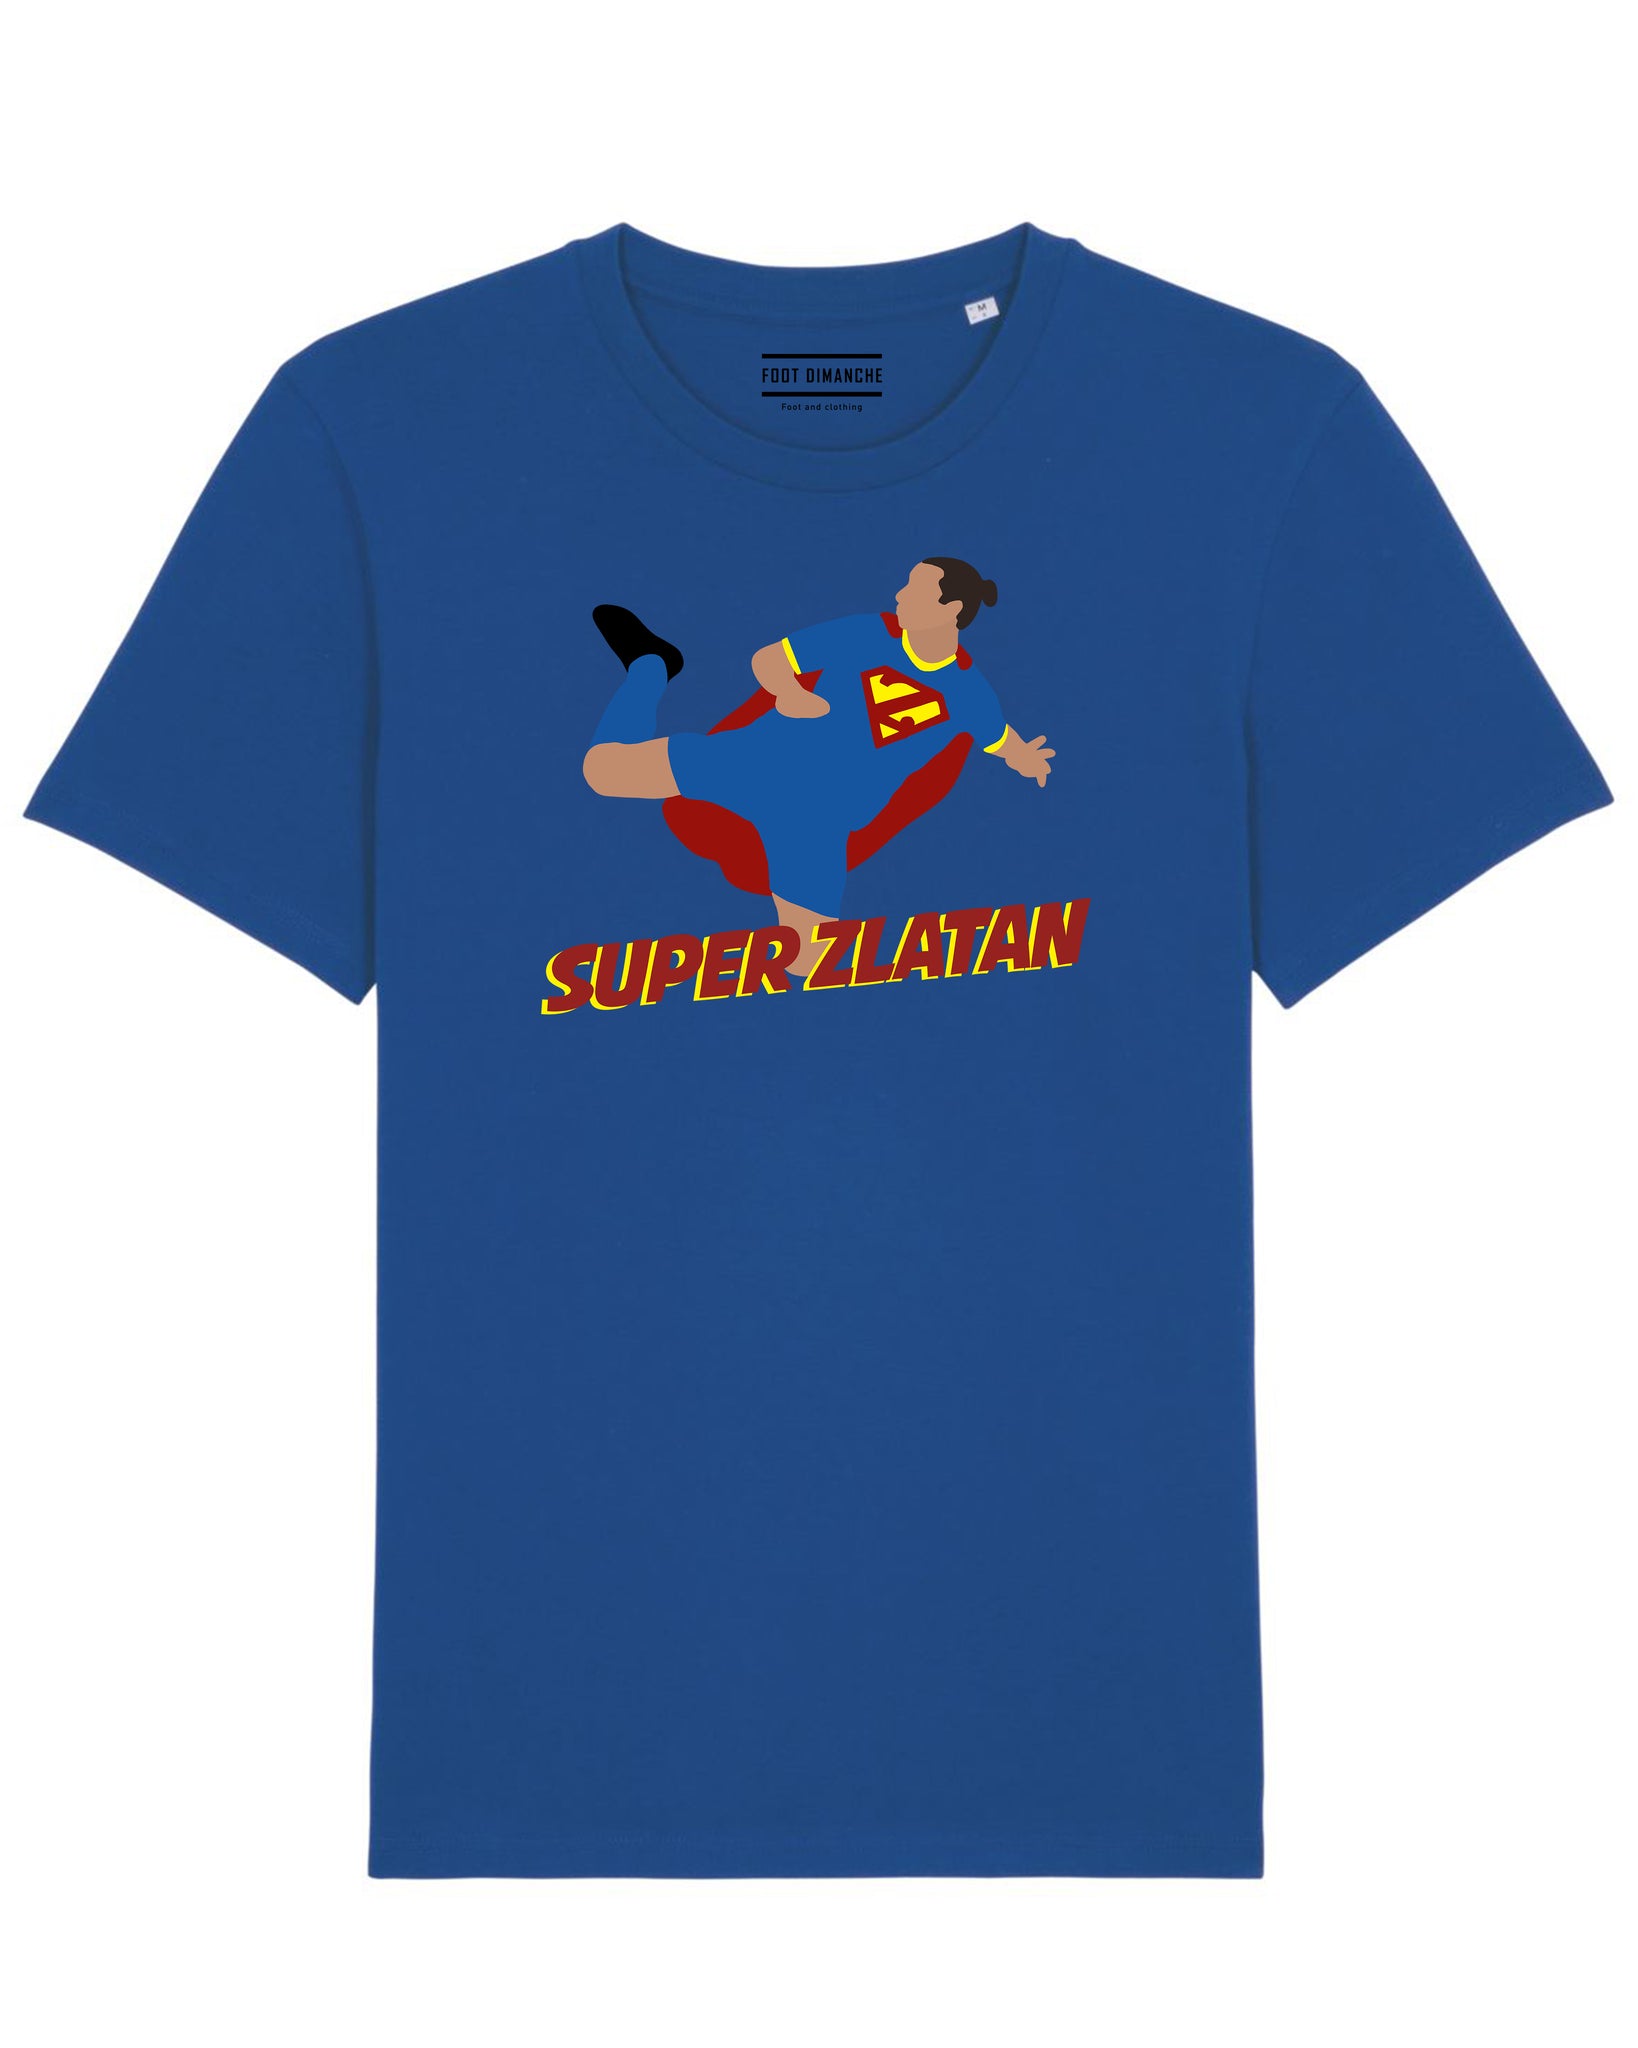 Tee Shirt Super Zlatan